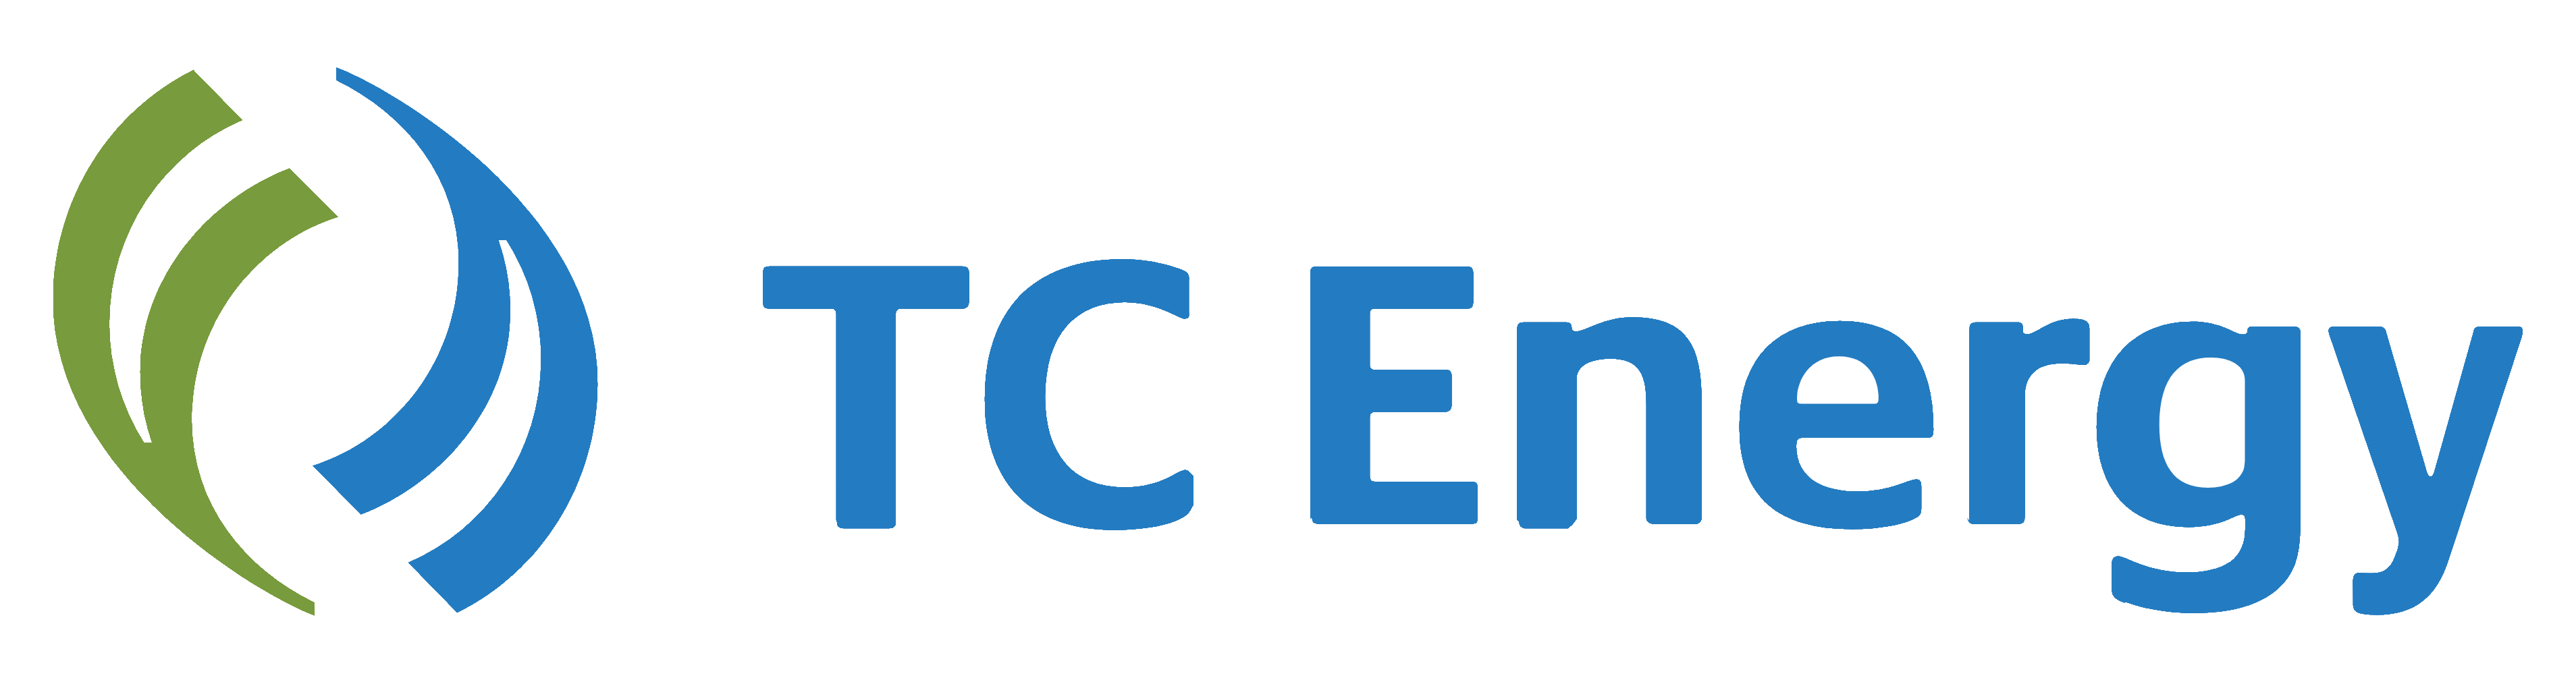 TC Energy logo clear back